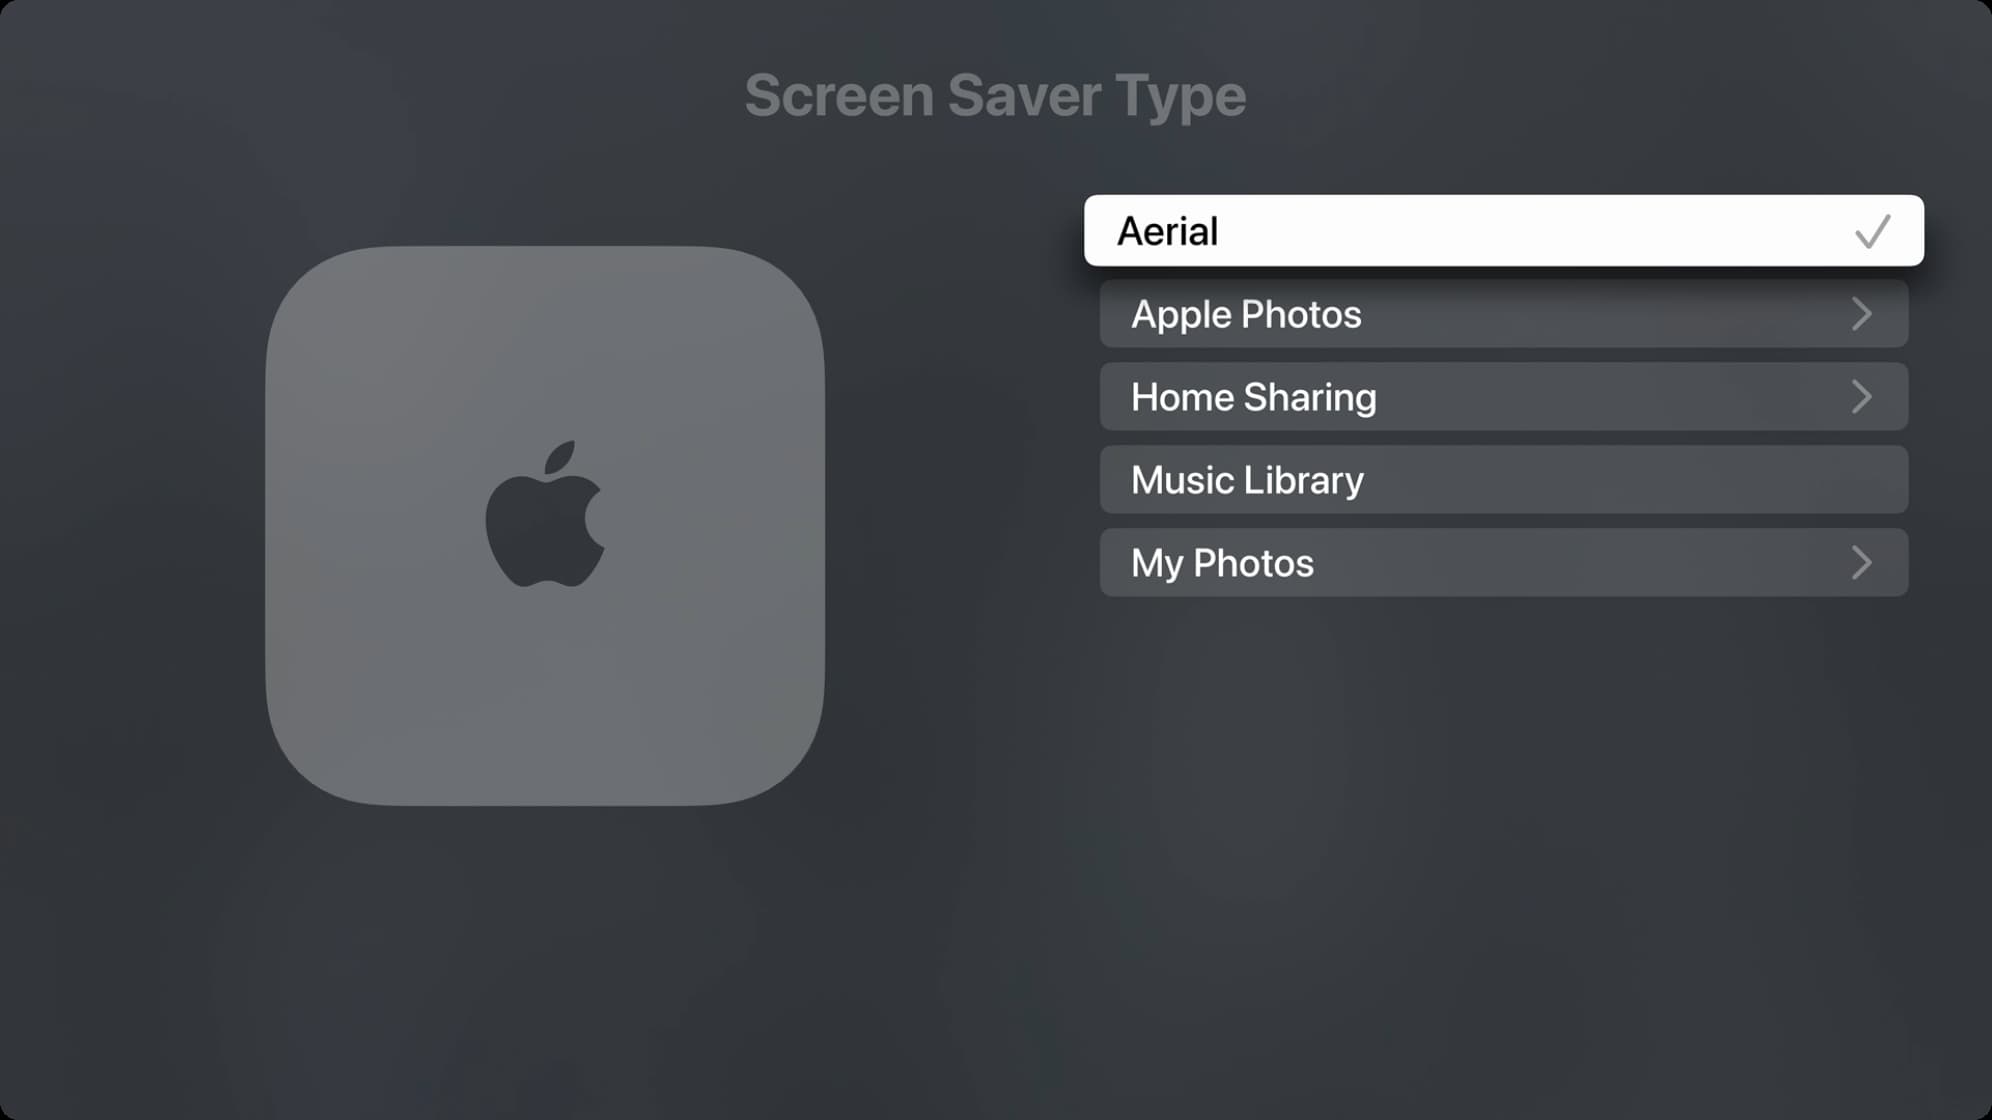 Screen Saver Type on Apple TV